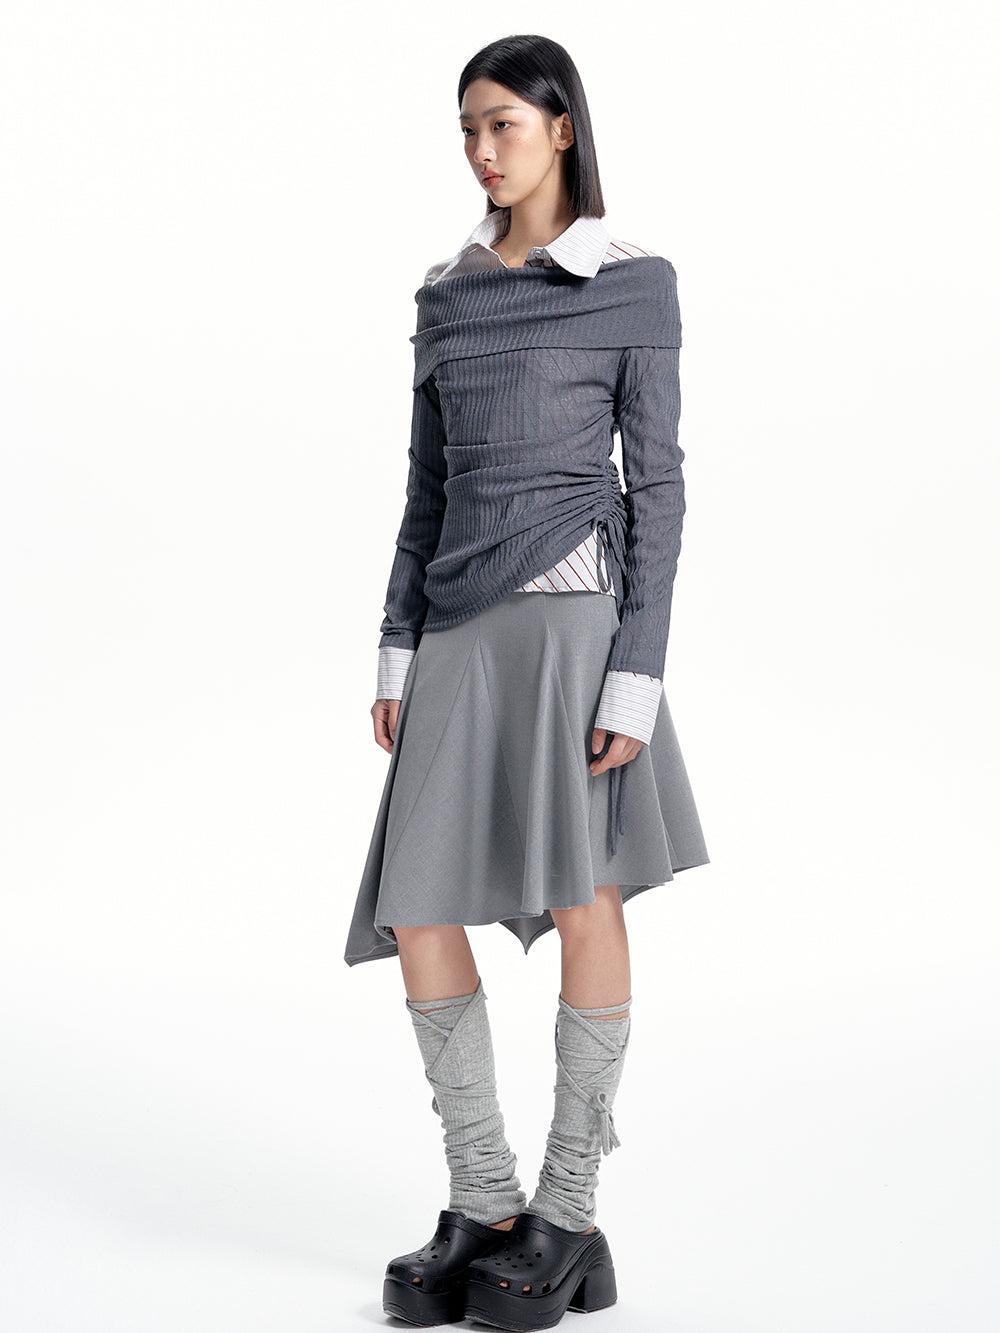 MUKTANK x WESAME Off-shoulder Long Sleeve Drawstring Dark Gray Knit Cardigan Women's Top